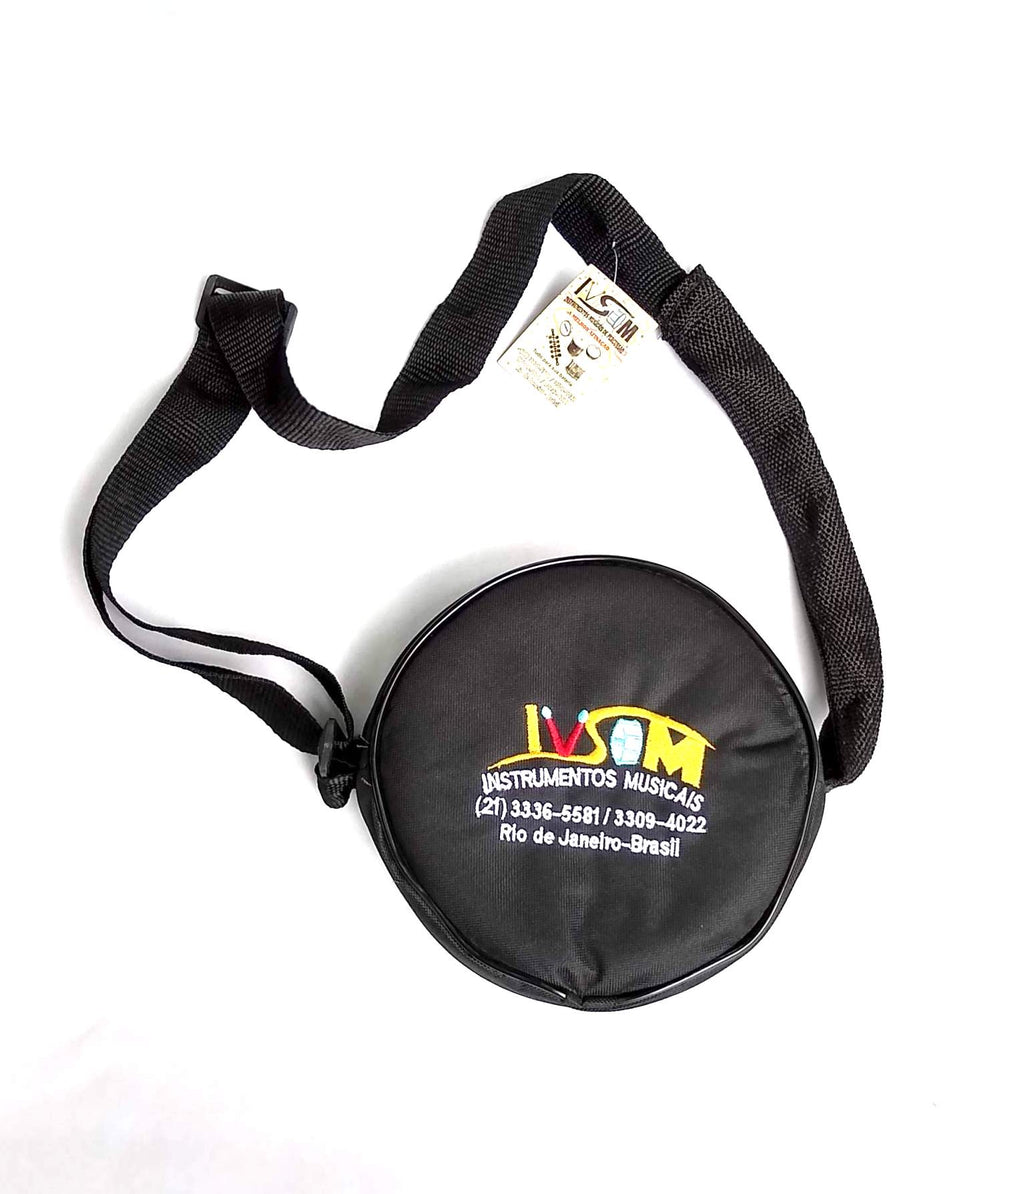 IVSOM Tamborim shoulder bag with baqueta holder.